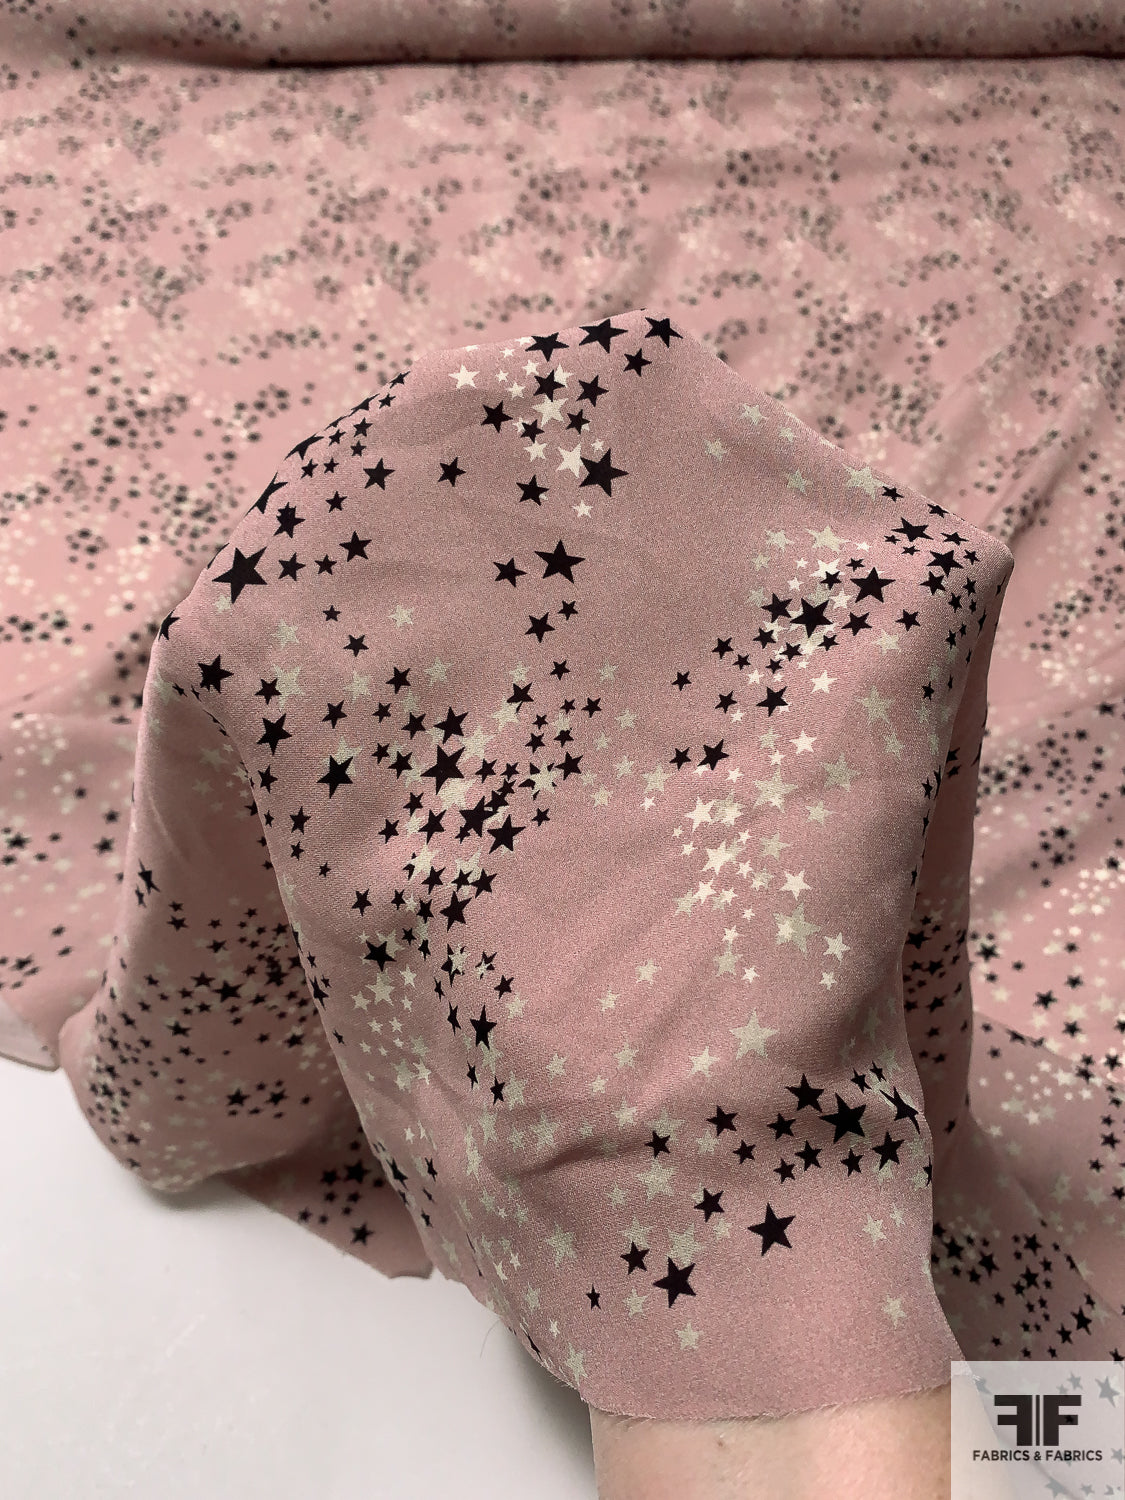 Stars Printed Silk Georgette - Dusty Pink / Black / Light Sage